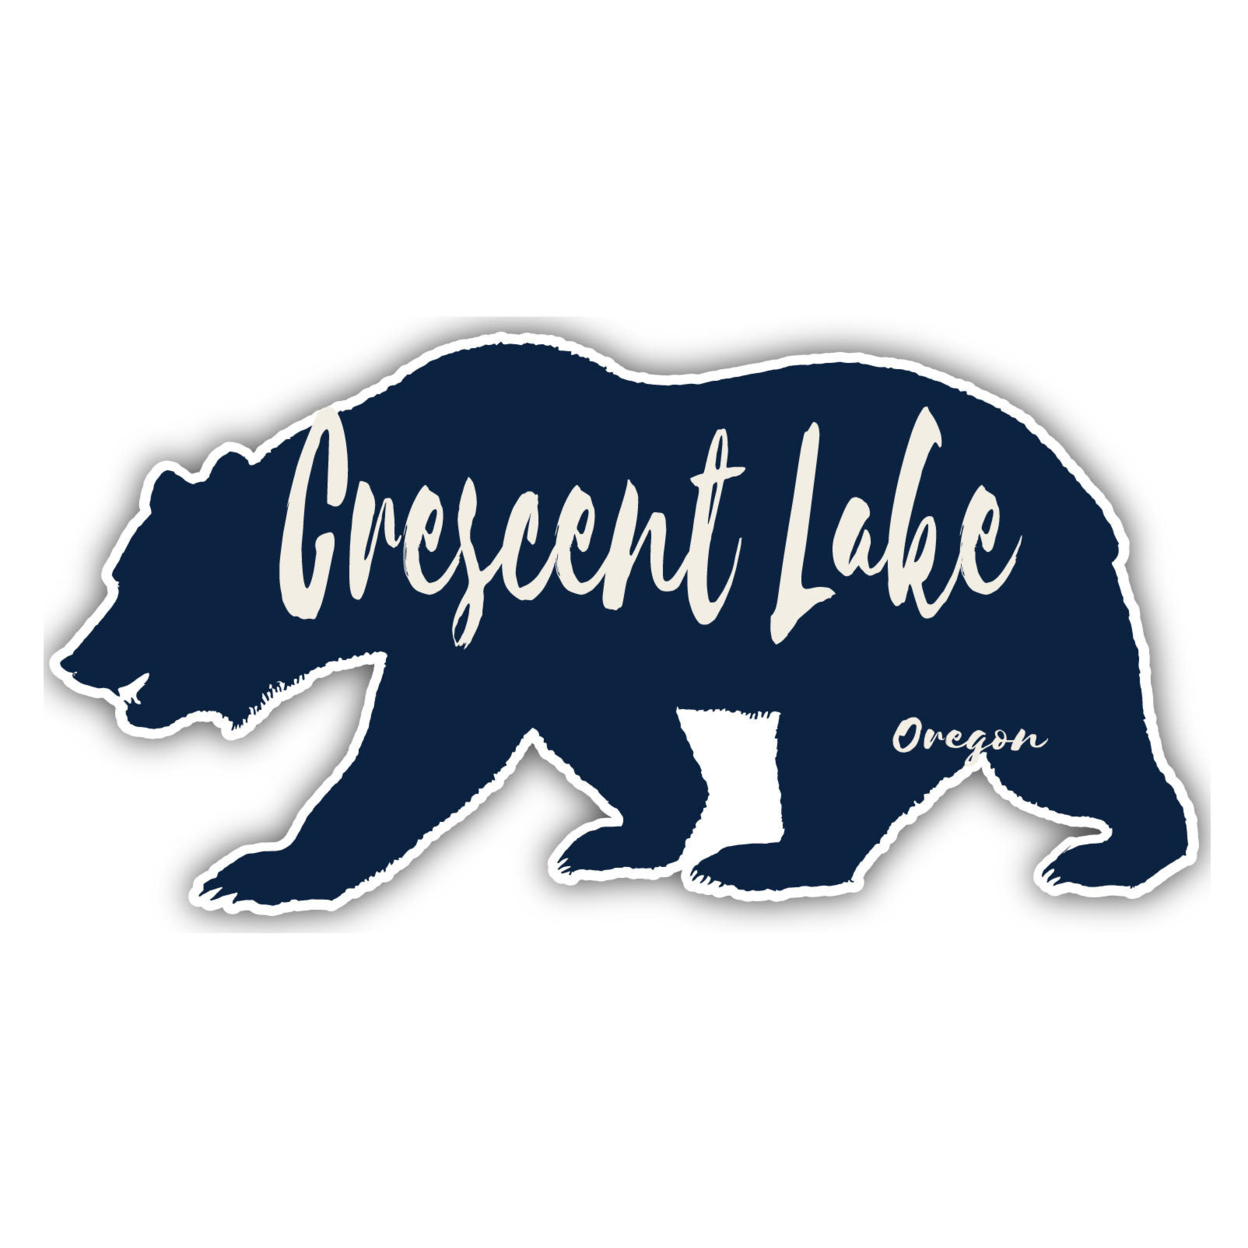 Crescent Lake Oregon Souvenir Decorative Stickers (Choose Theme And Size) - Single Unit, 12-Inch, Tent